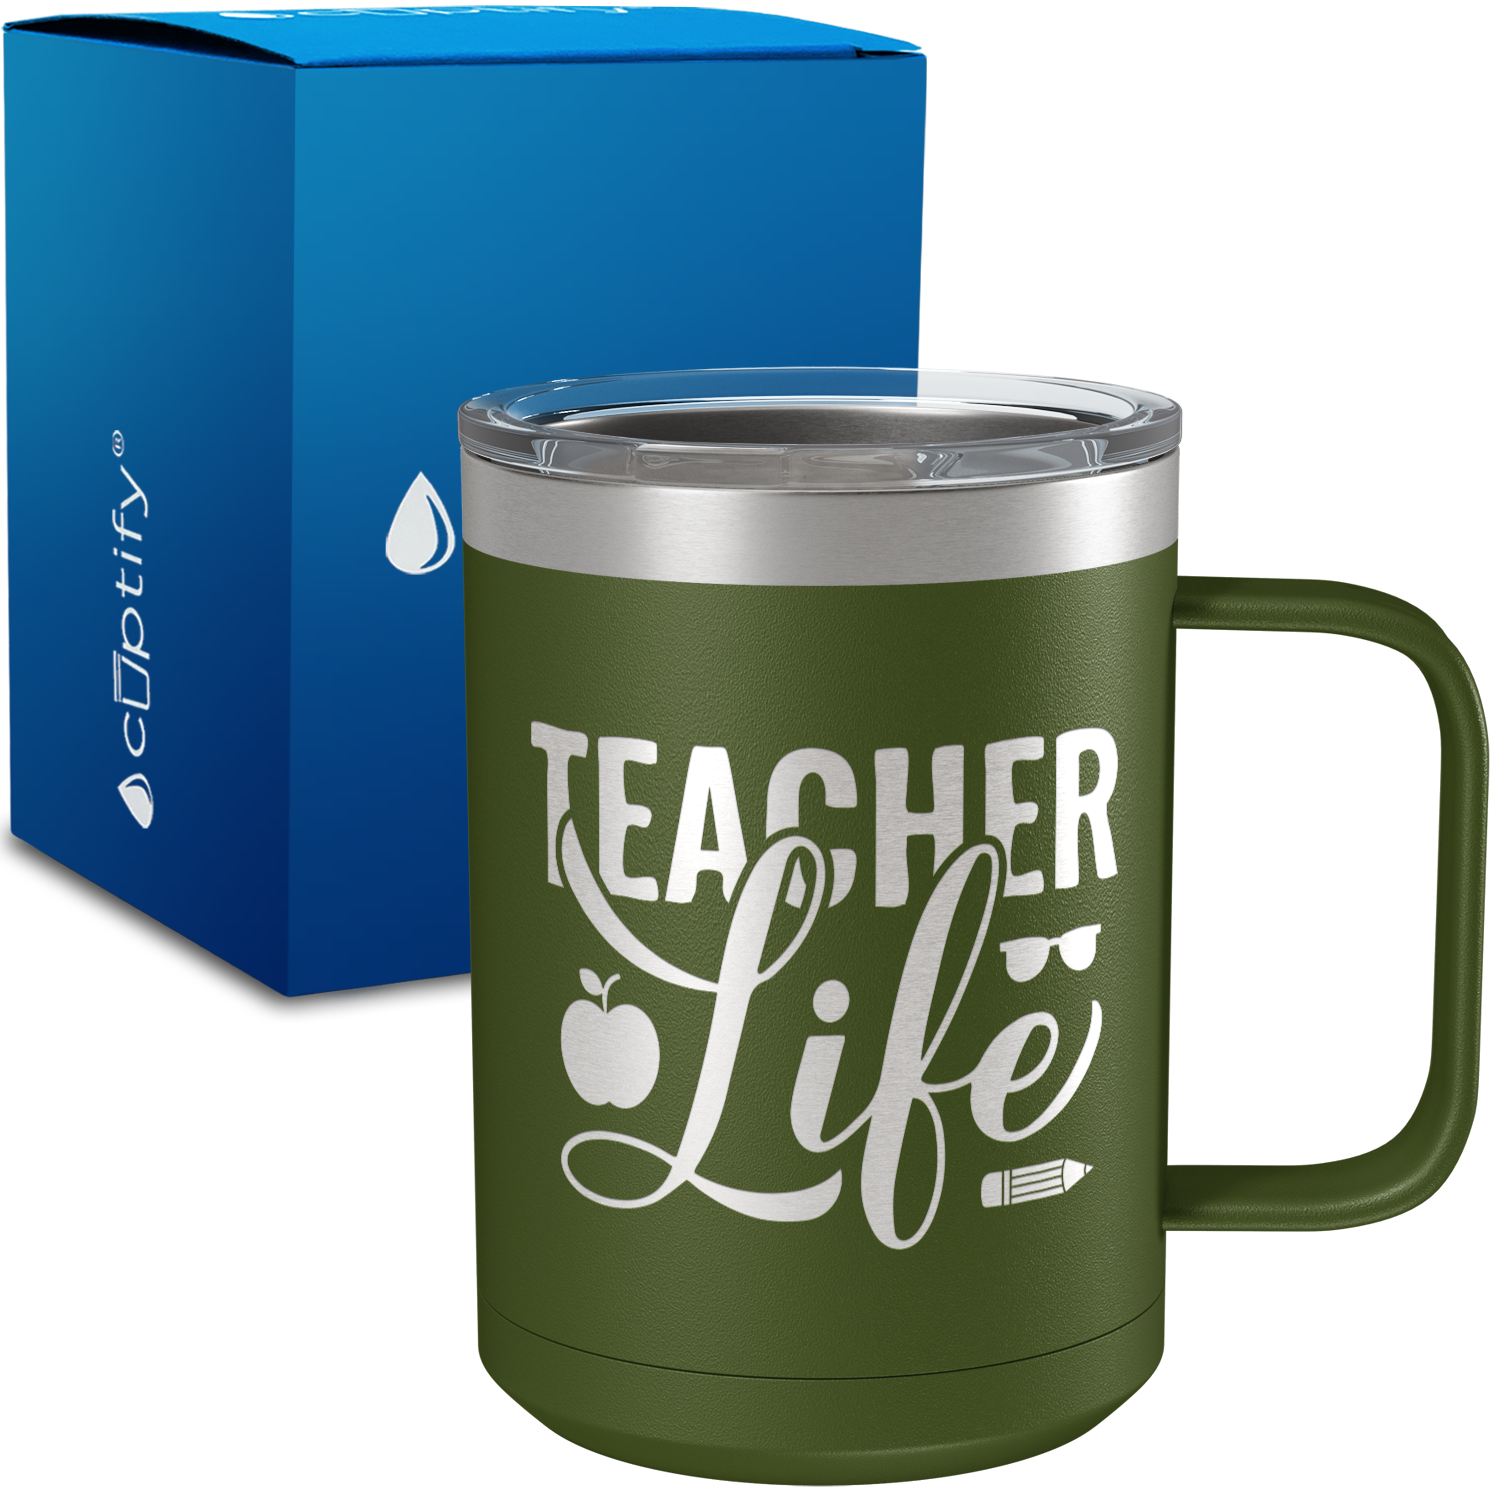 Teacher Life Apples and Pencils 15oz Stainless Steel Mug